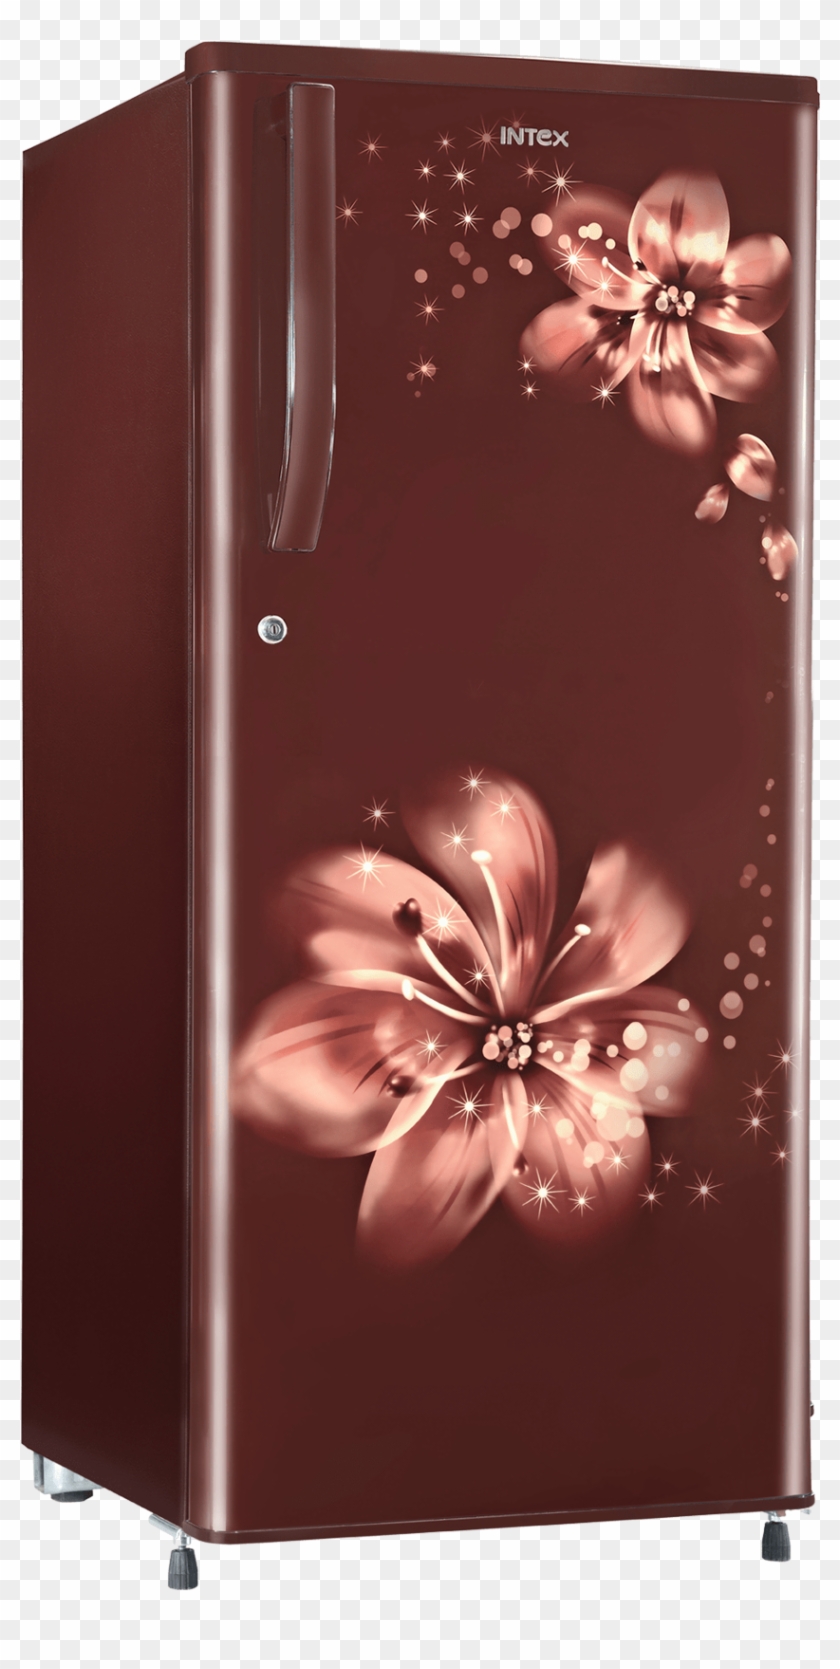 Intex Hawaiian Chocolate Irdg2052sc Refrigerator - Floral Design Clipart #3133328